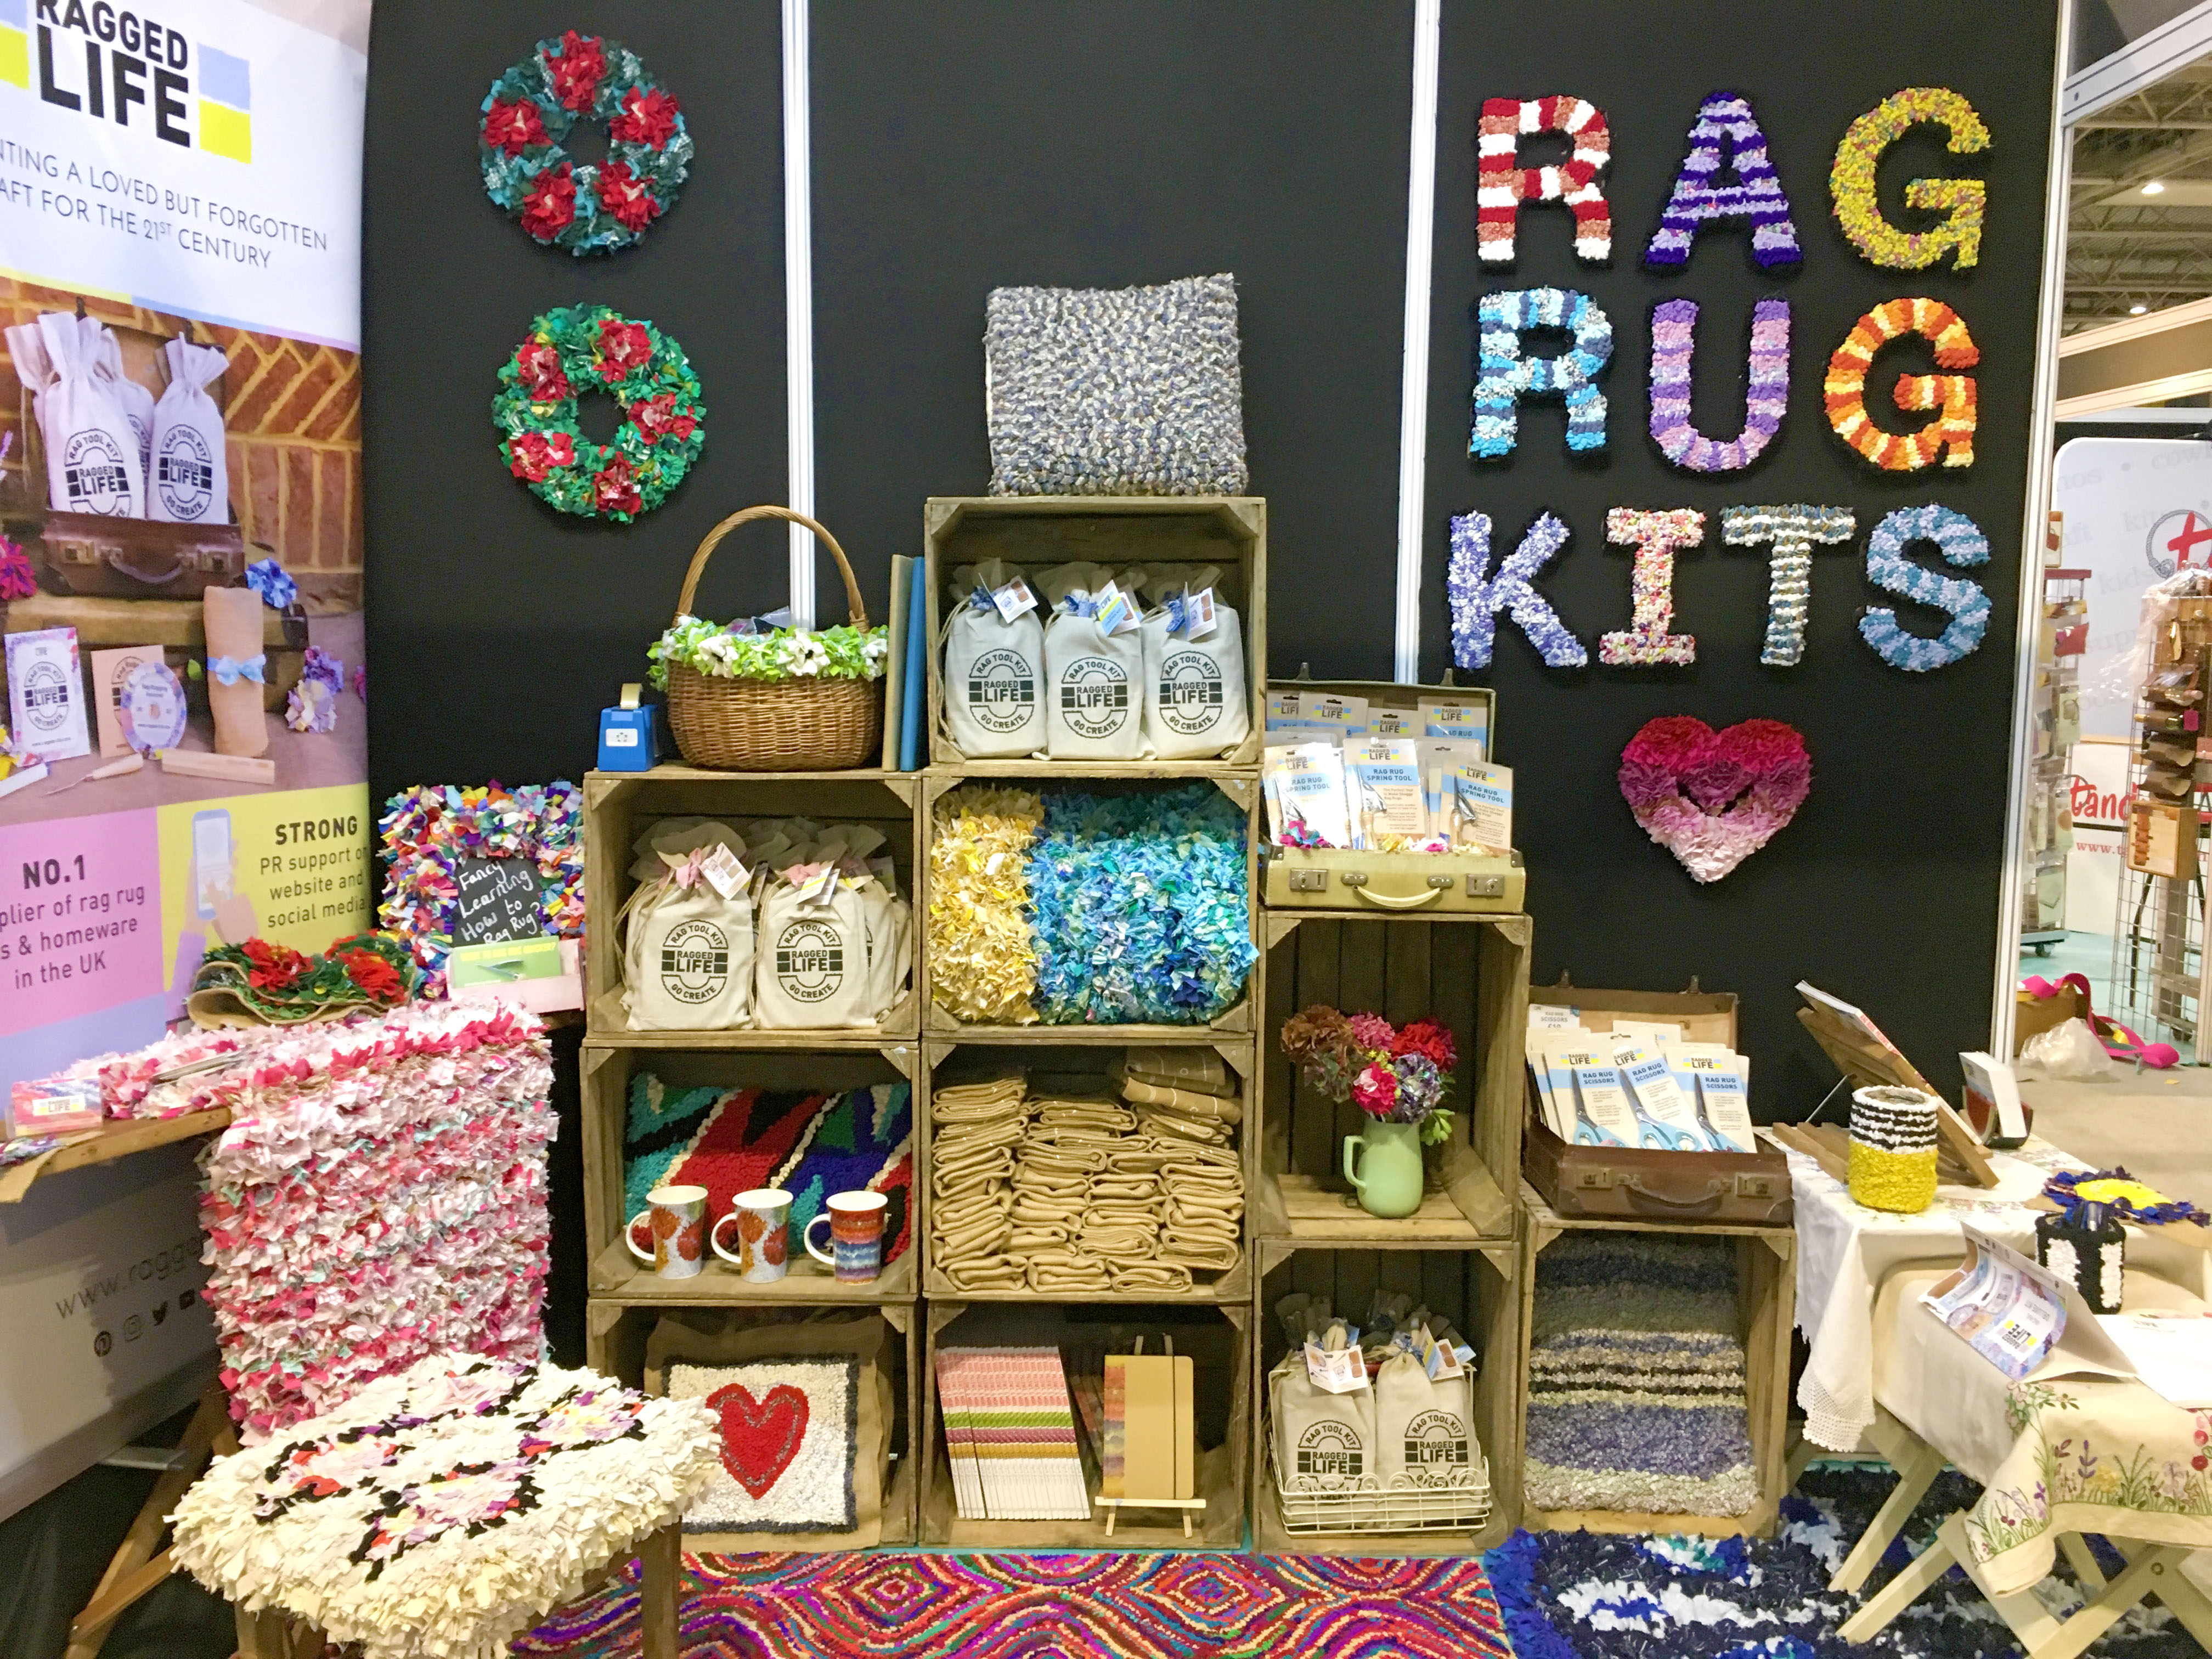 Ragged Life Rag Rug Products at CHSI Stitches Trade Fair 2018